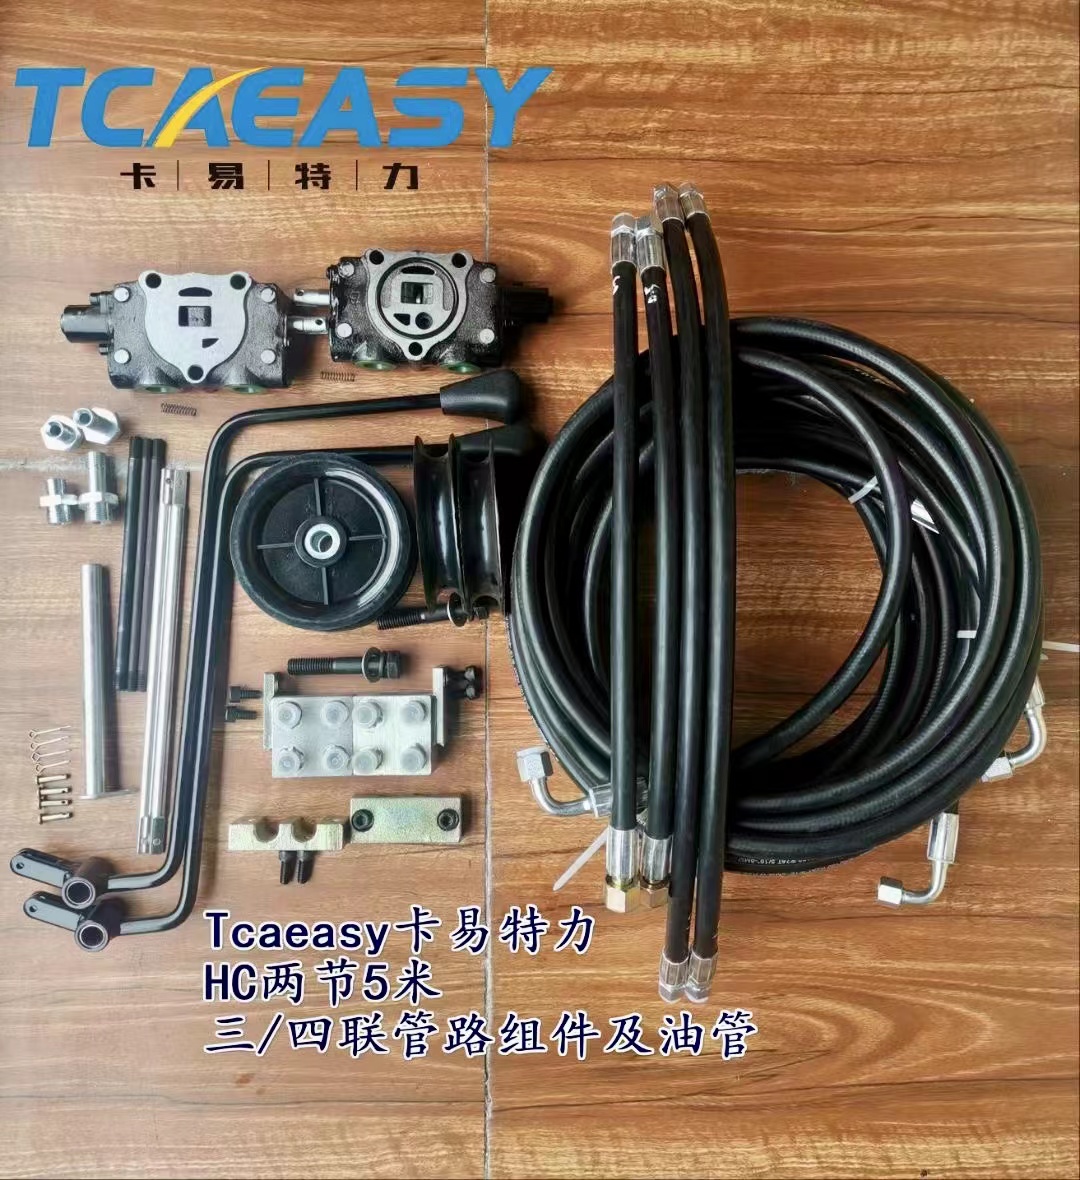 HANGZHOU Forklift Attachment Tubing HC1003